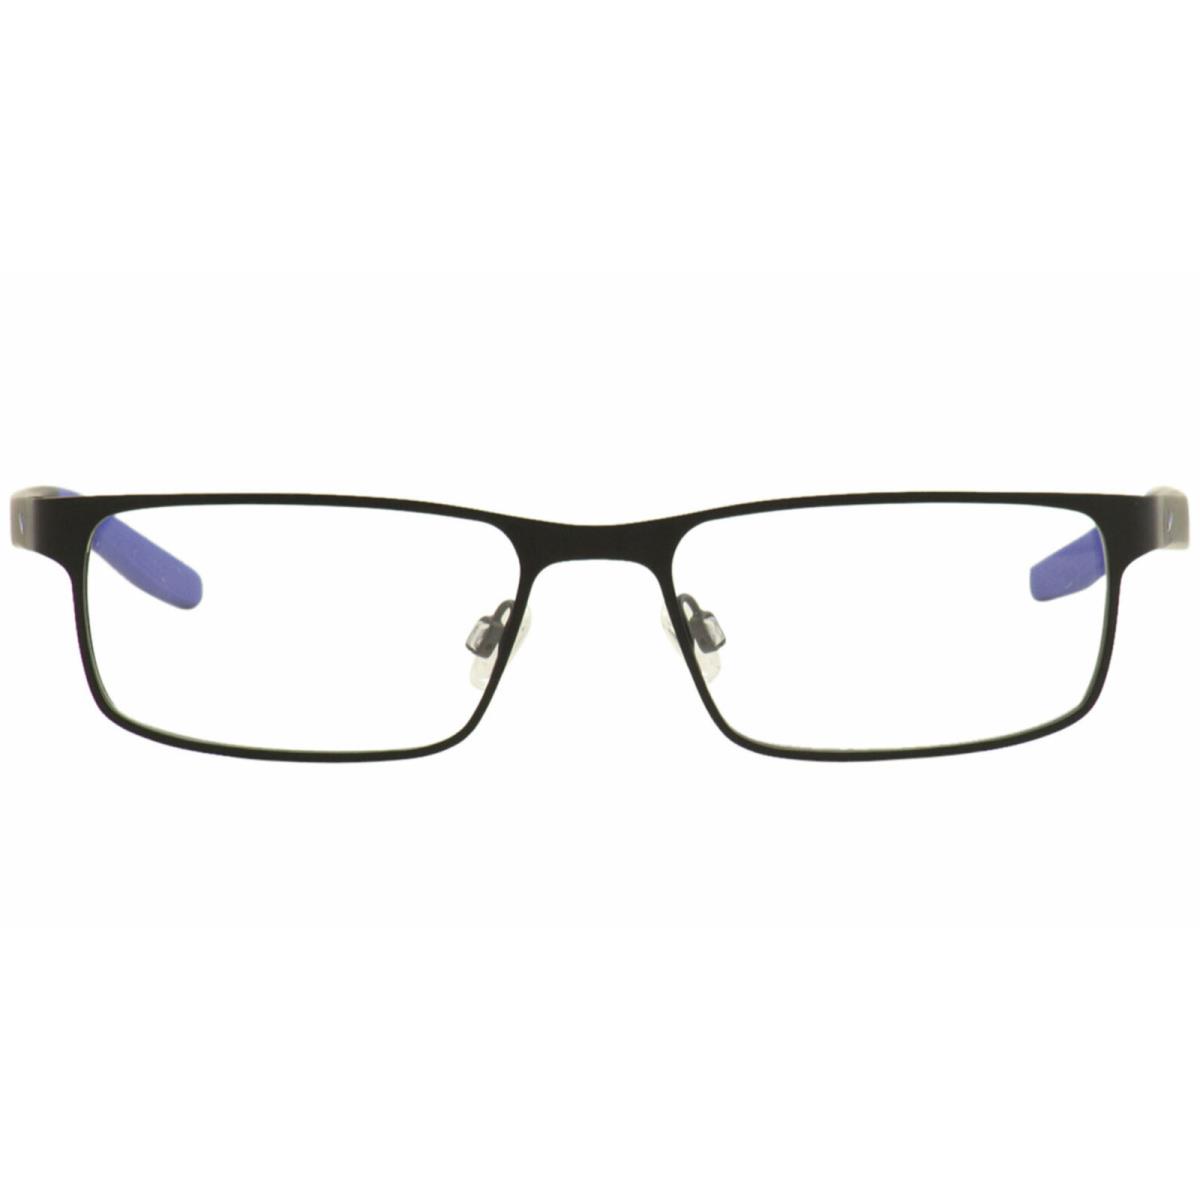 Nike Reading Glasses 8131 008 55-17 140 Matte Black Blue Frames Readers